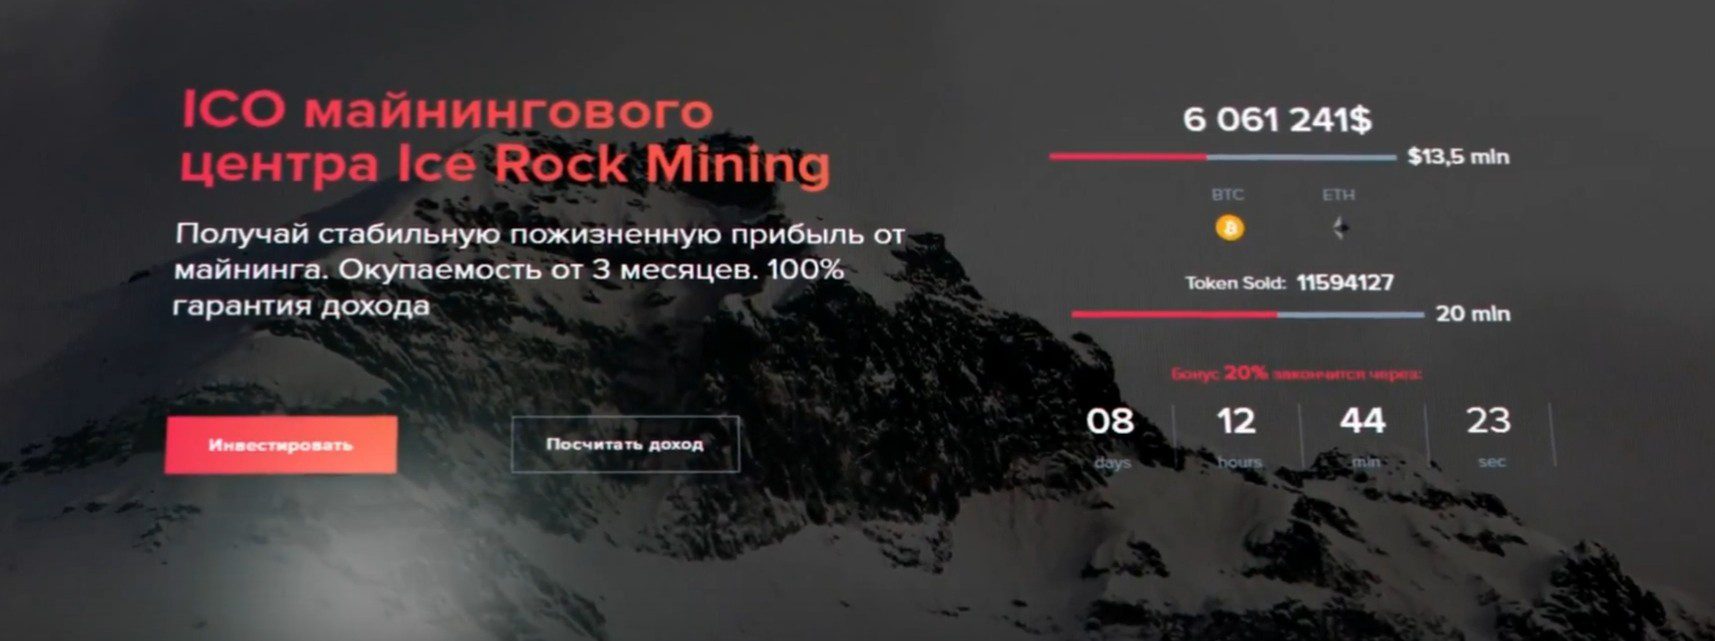 ice rock mining отзывы